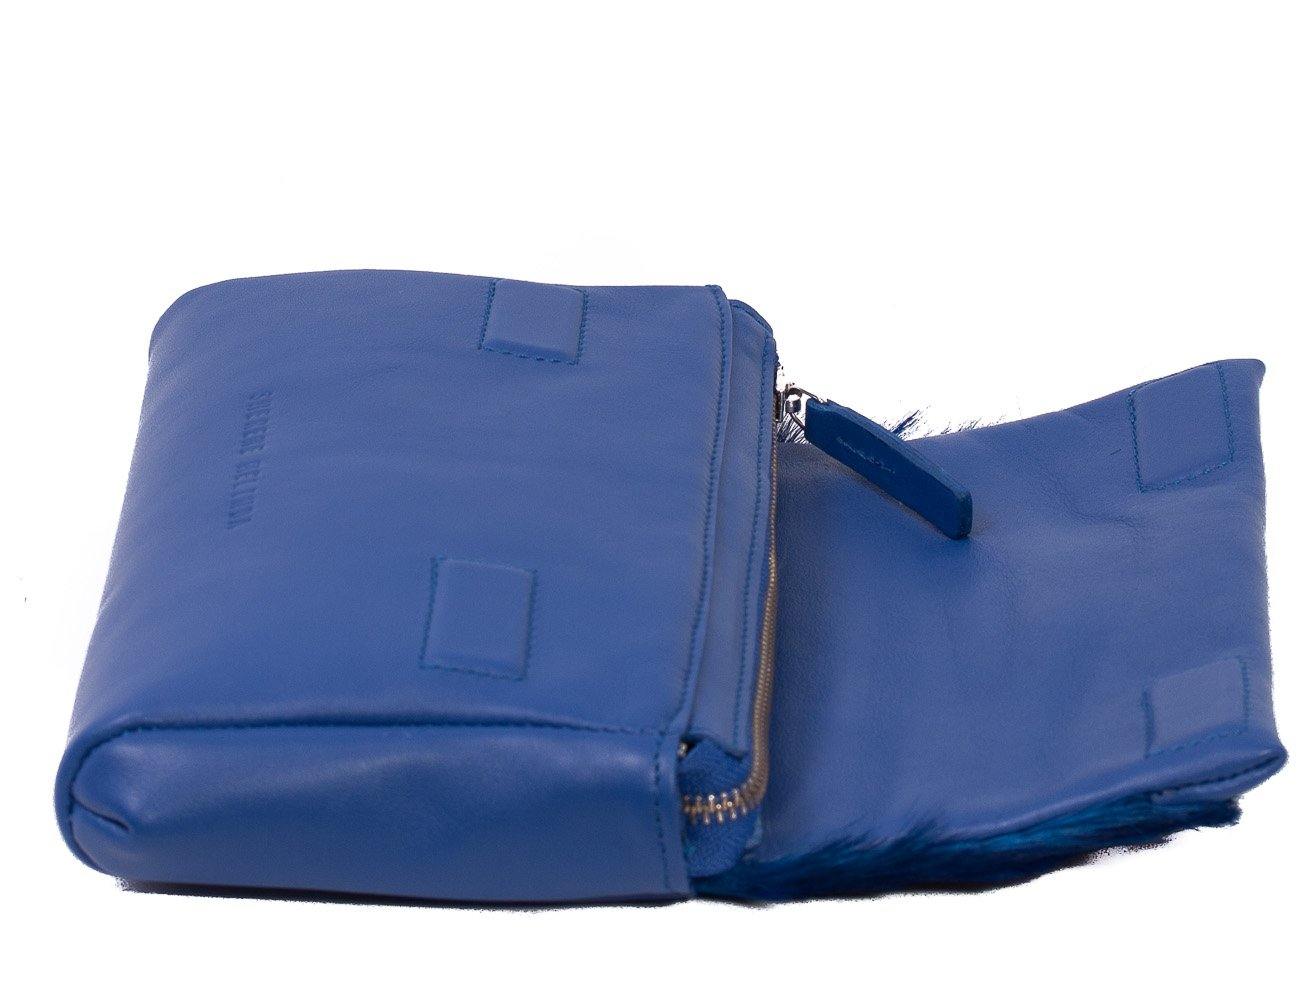 sherene melinda springbok hair-on-hide royal blue leather Sophy SS18 Clutch Bag open